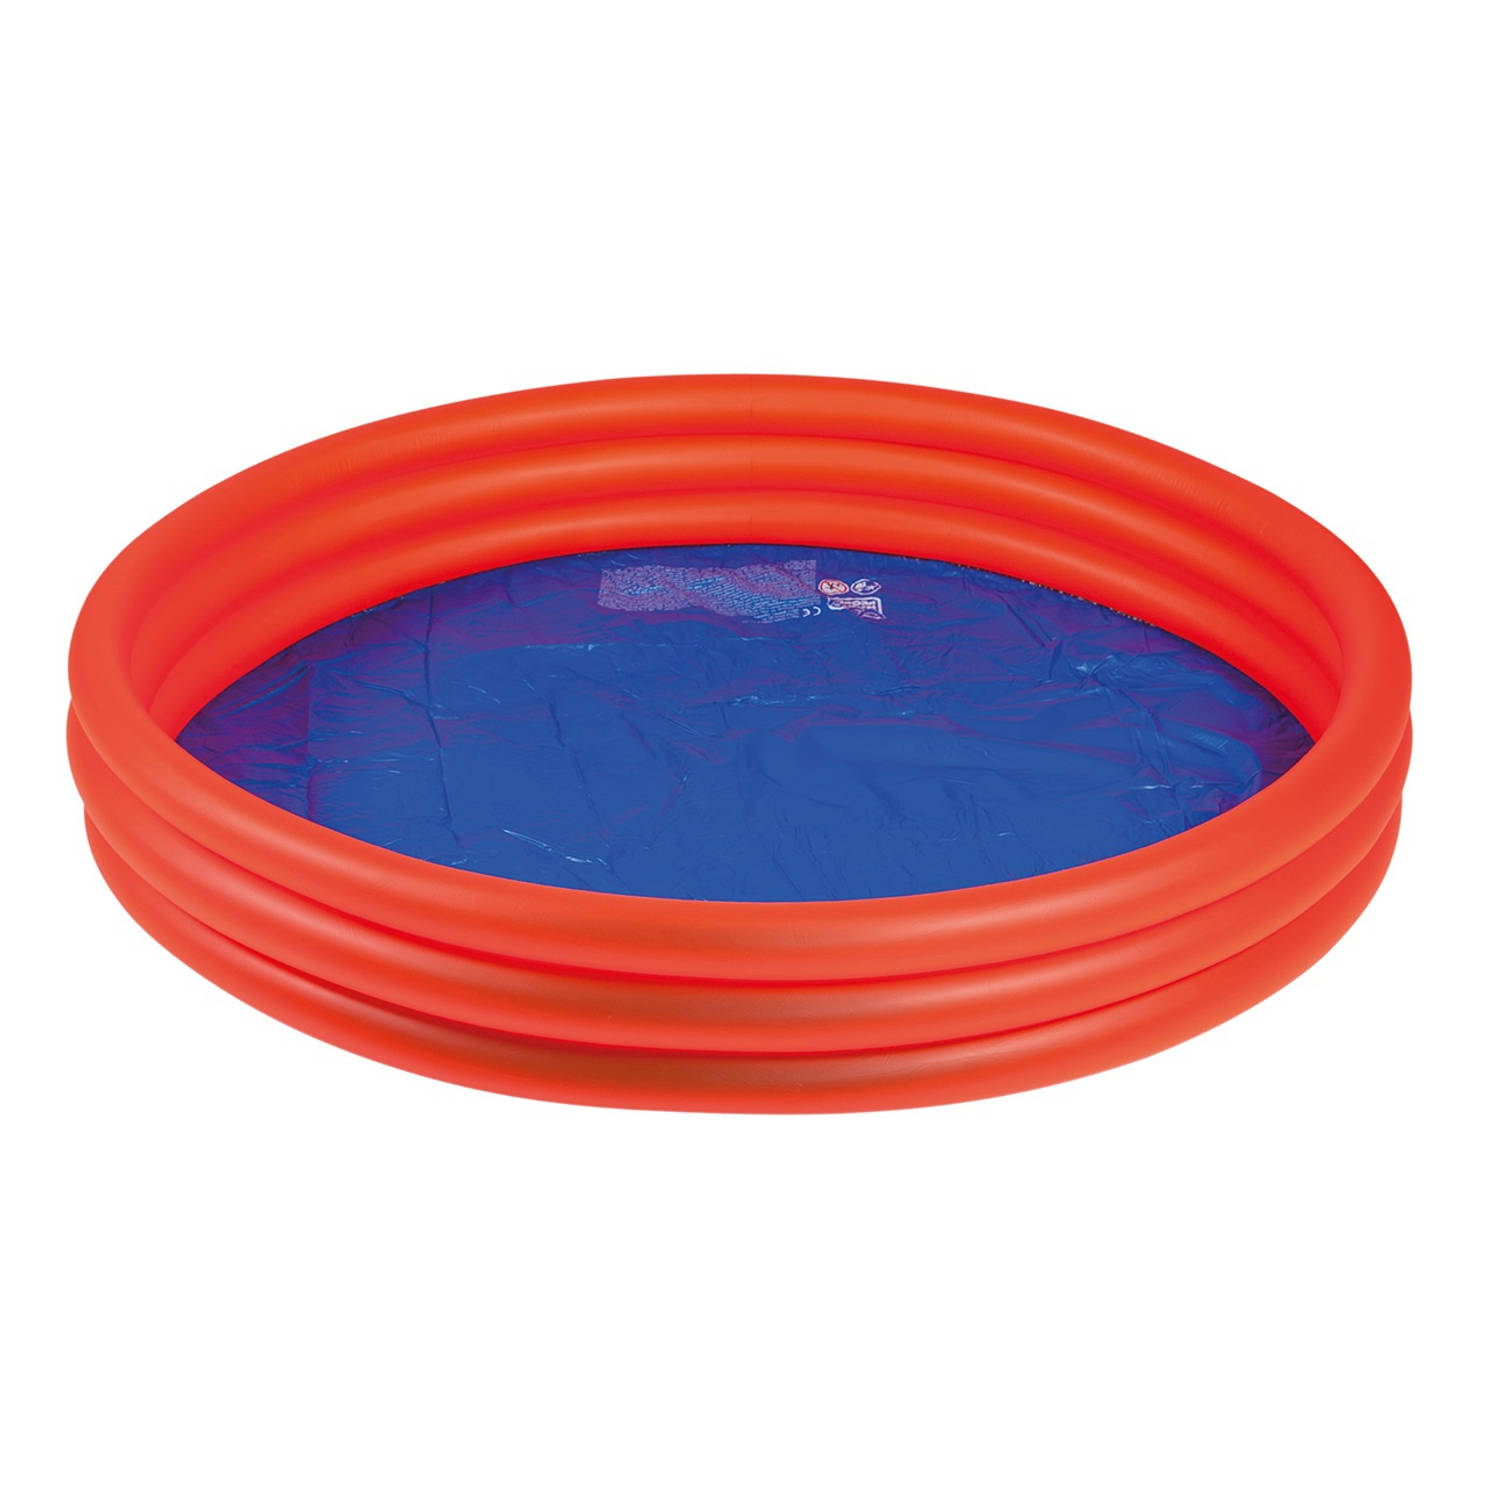 Wehncke opblaaszwembad junior 157 x 28 cm PVC rood-blauw